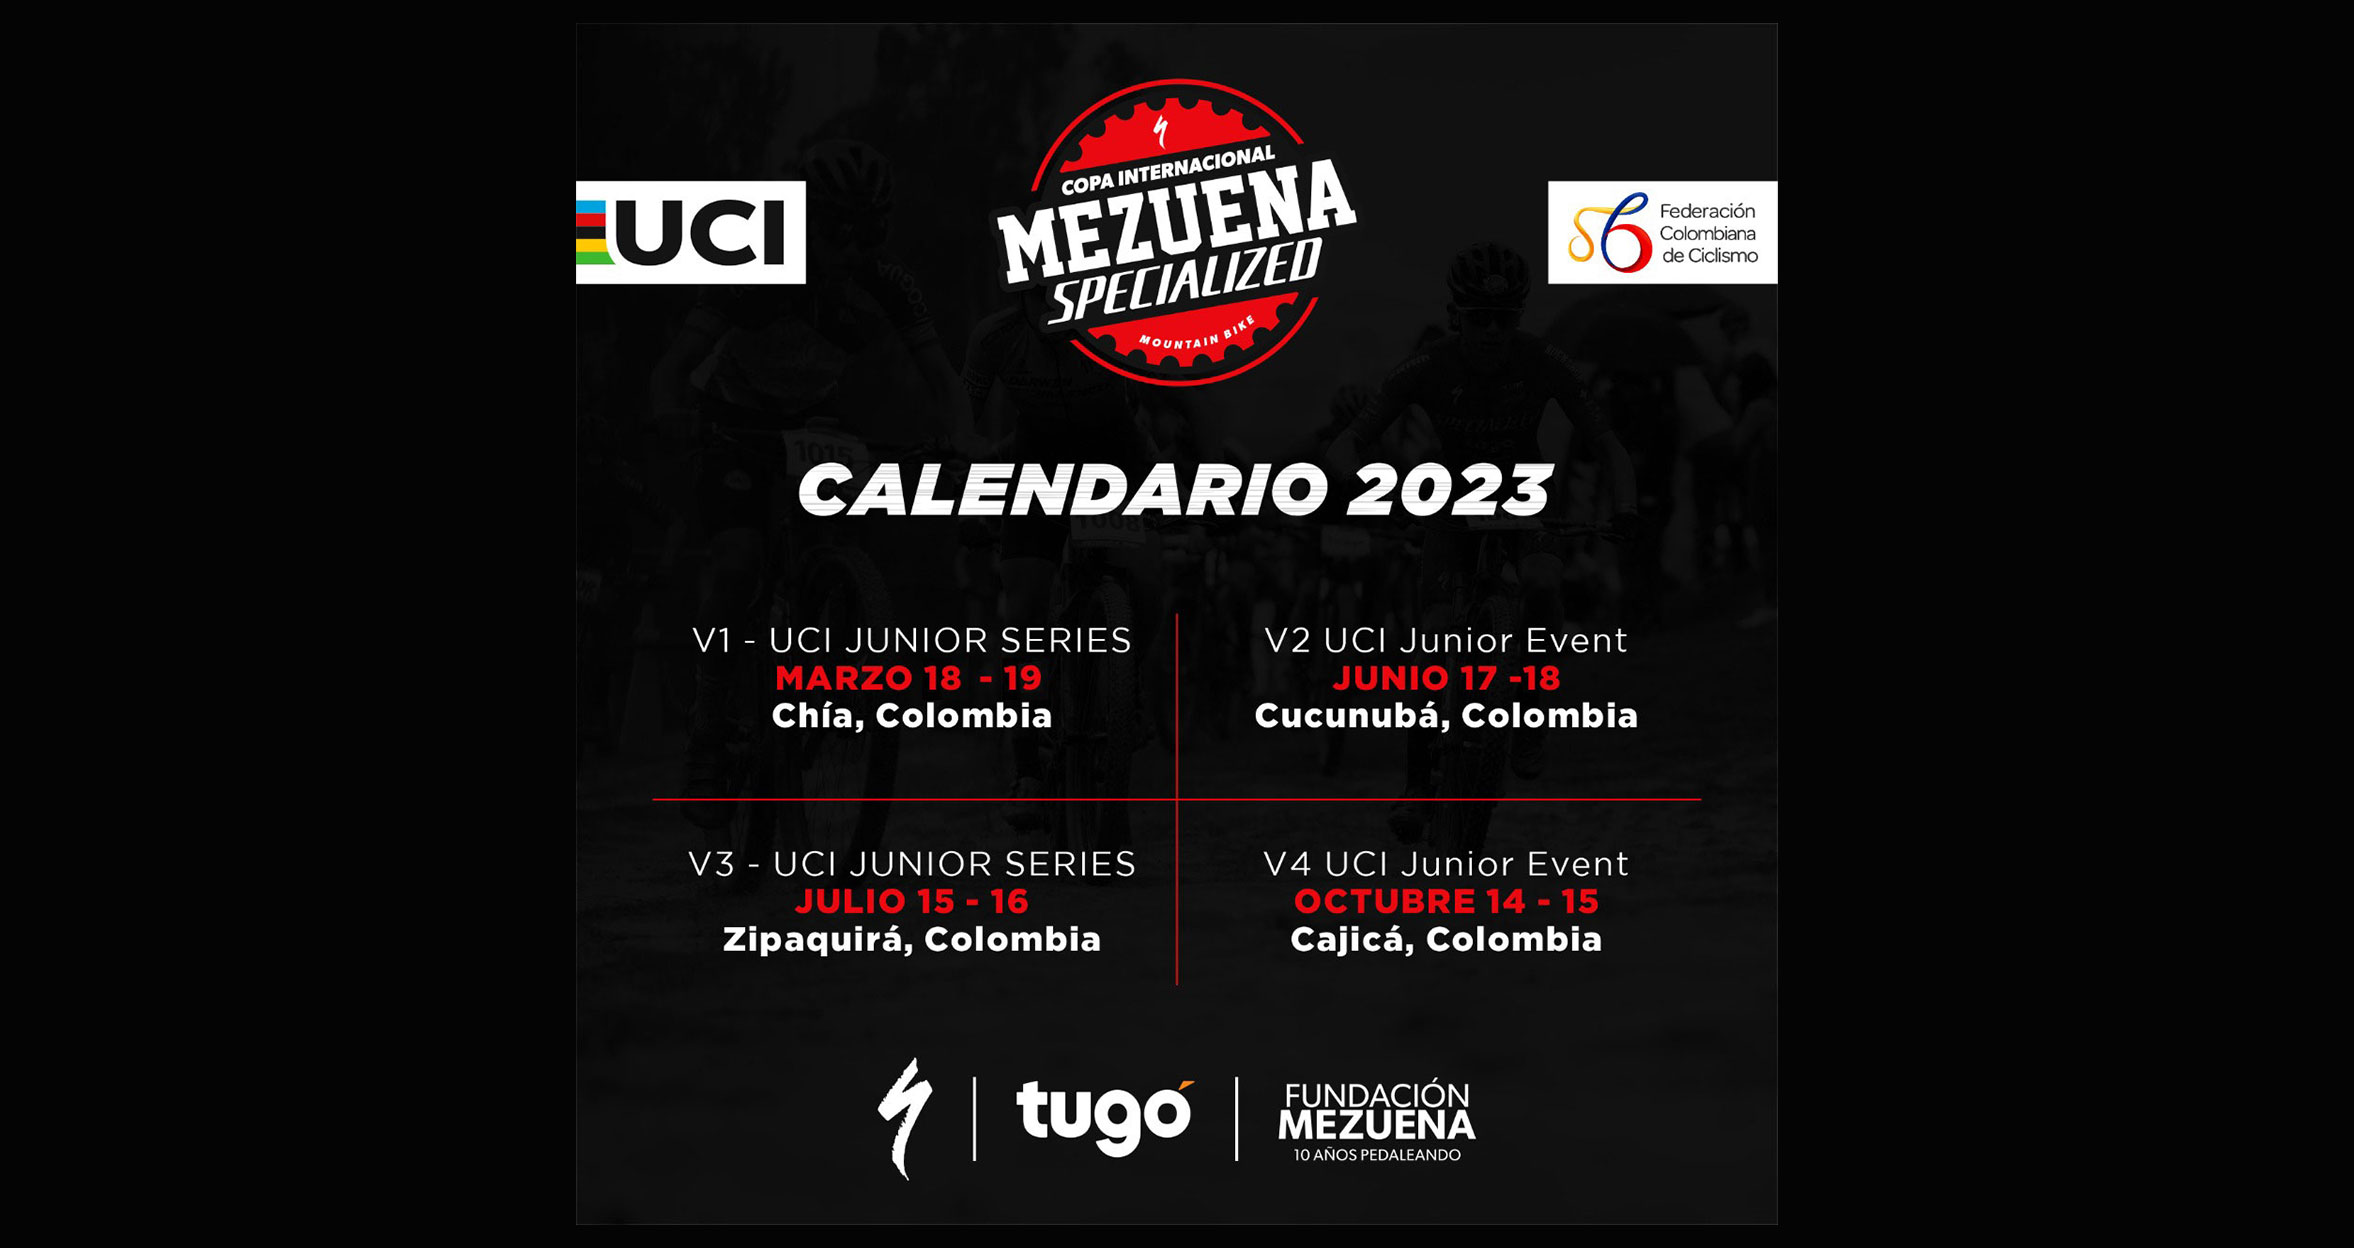 Calendario Copa Mezuena Specialized 2023